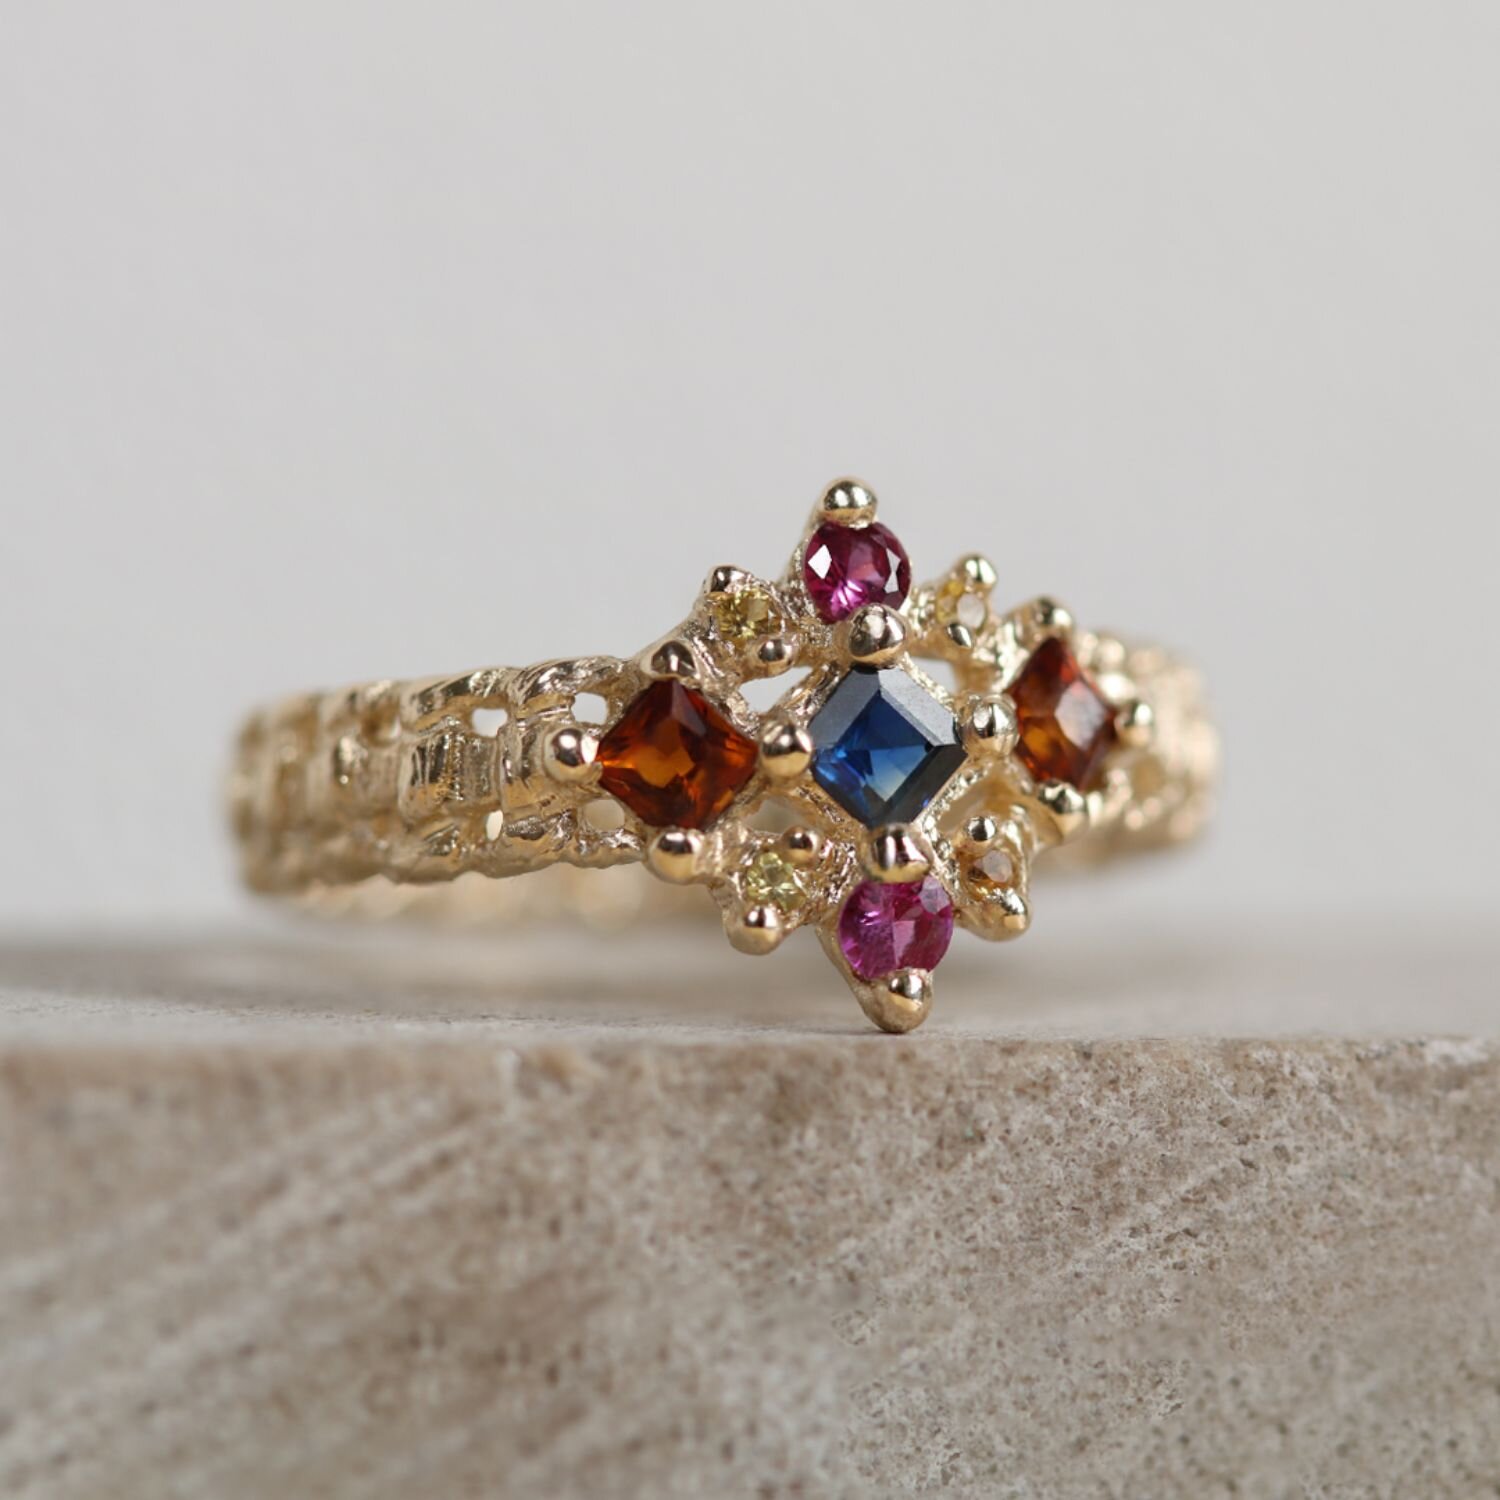 Rosalyn Faith - Gemstone woven ring.jpg